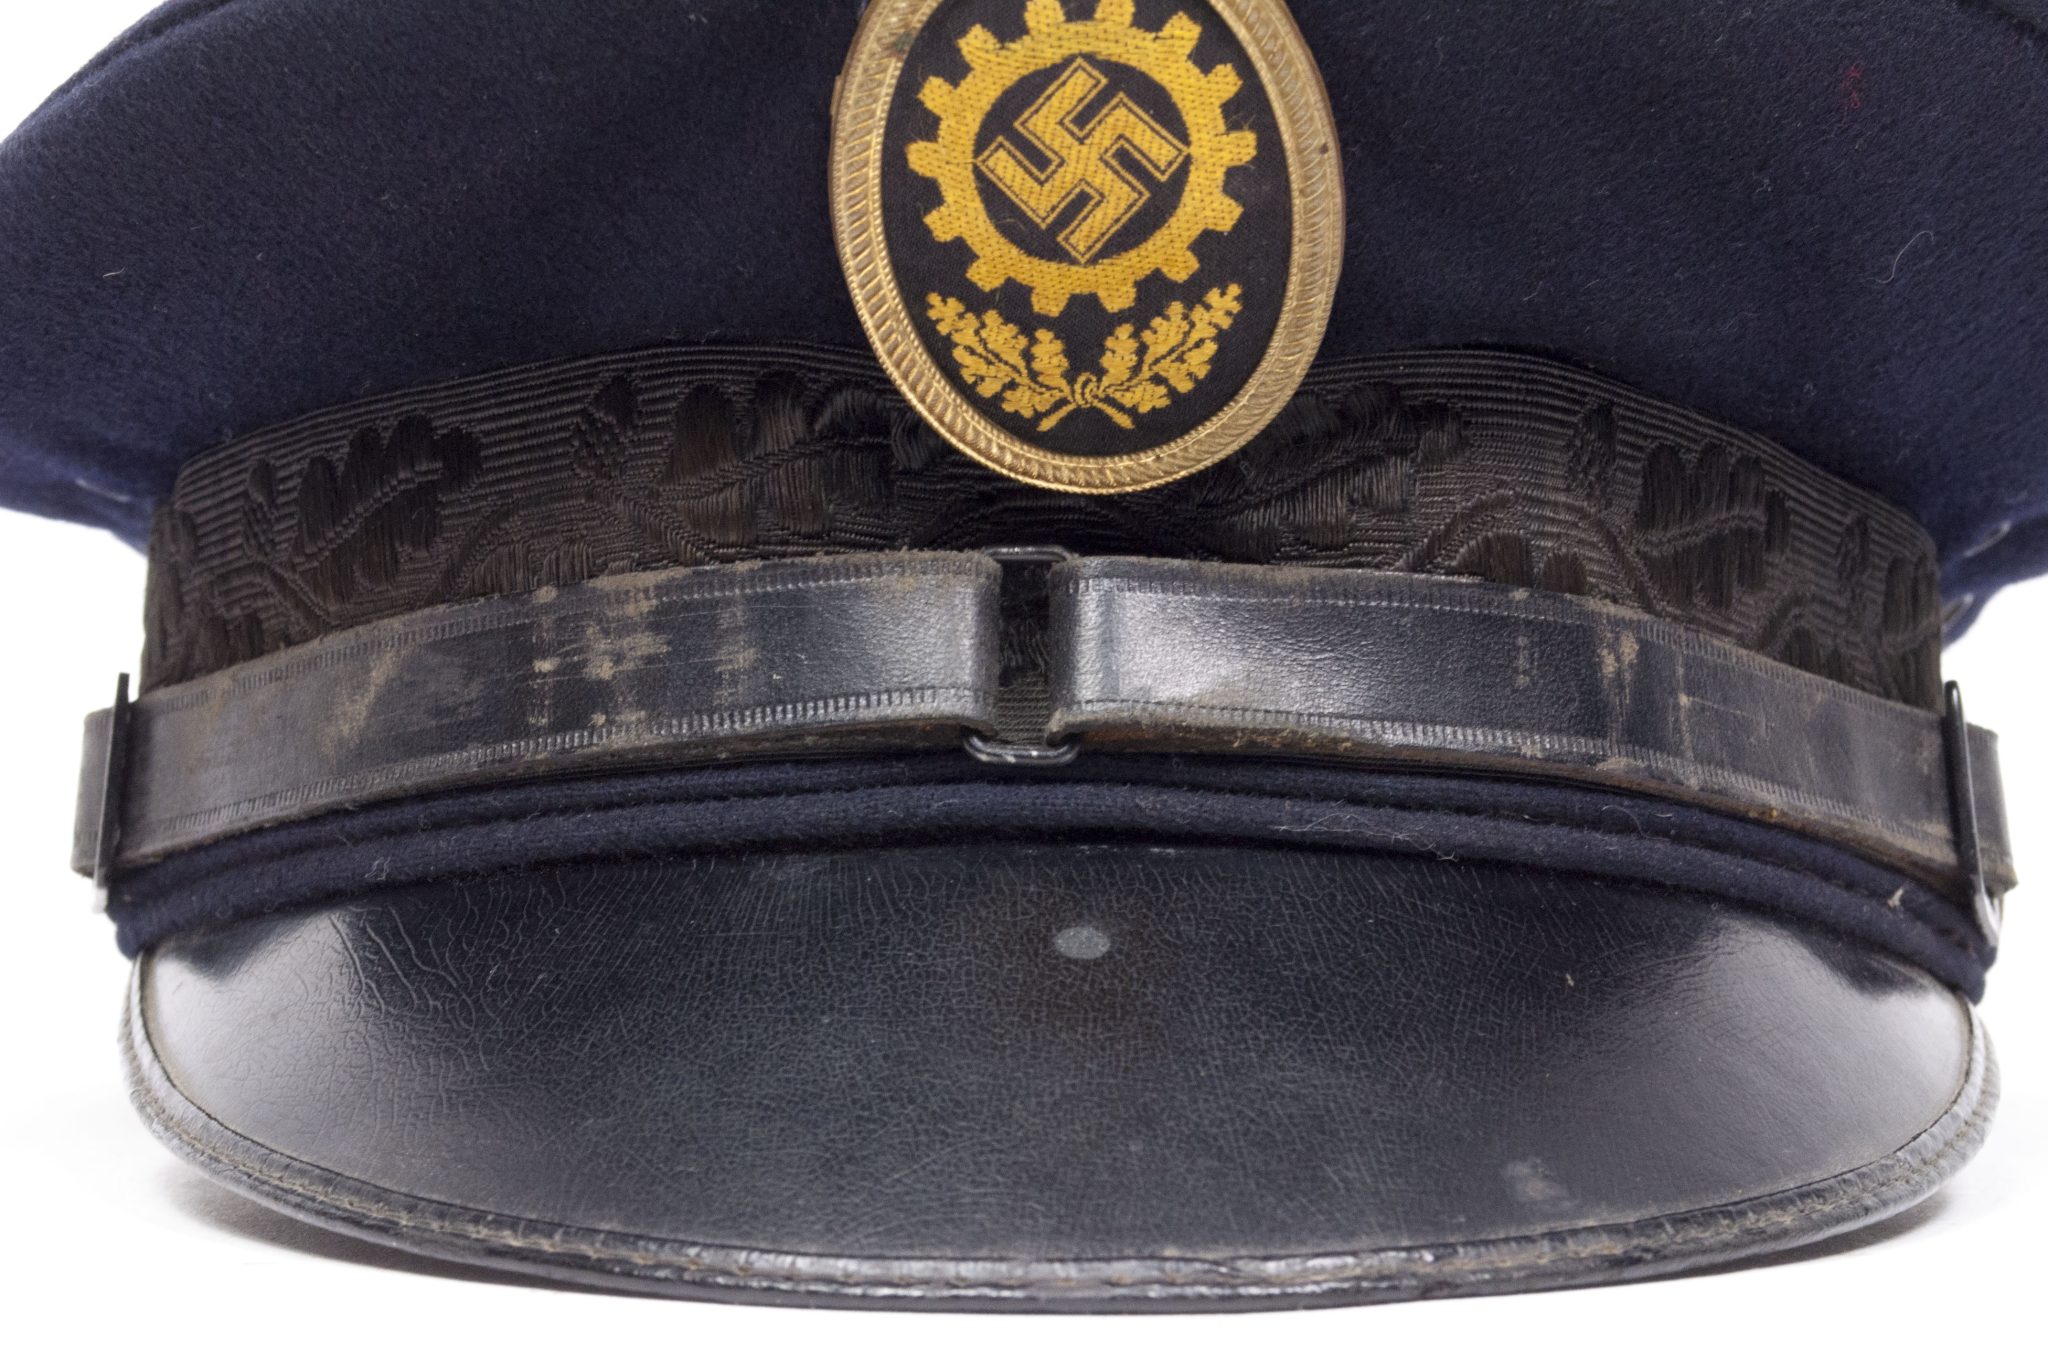 Deutsche Arbeitsfront (DAF) visor cap (with RZM label)